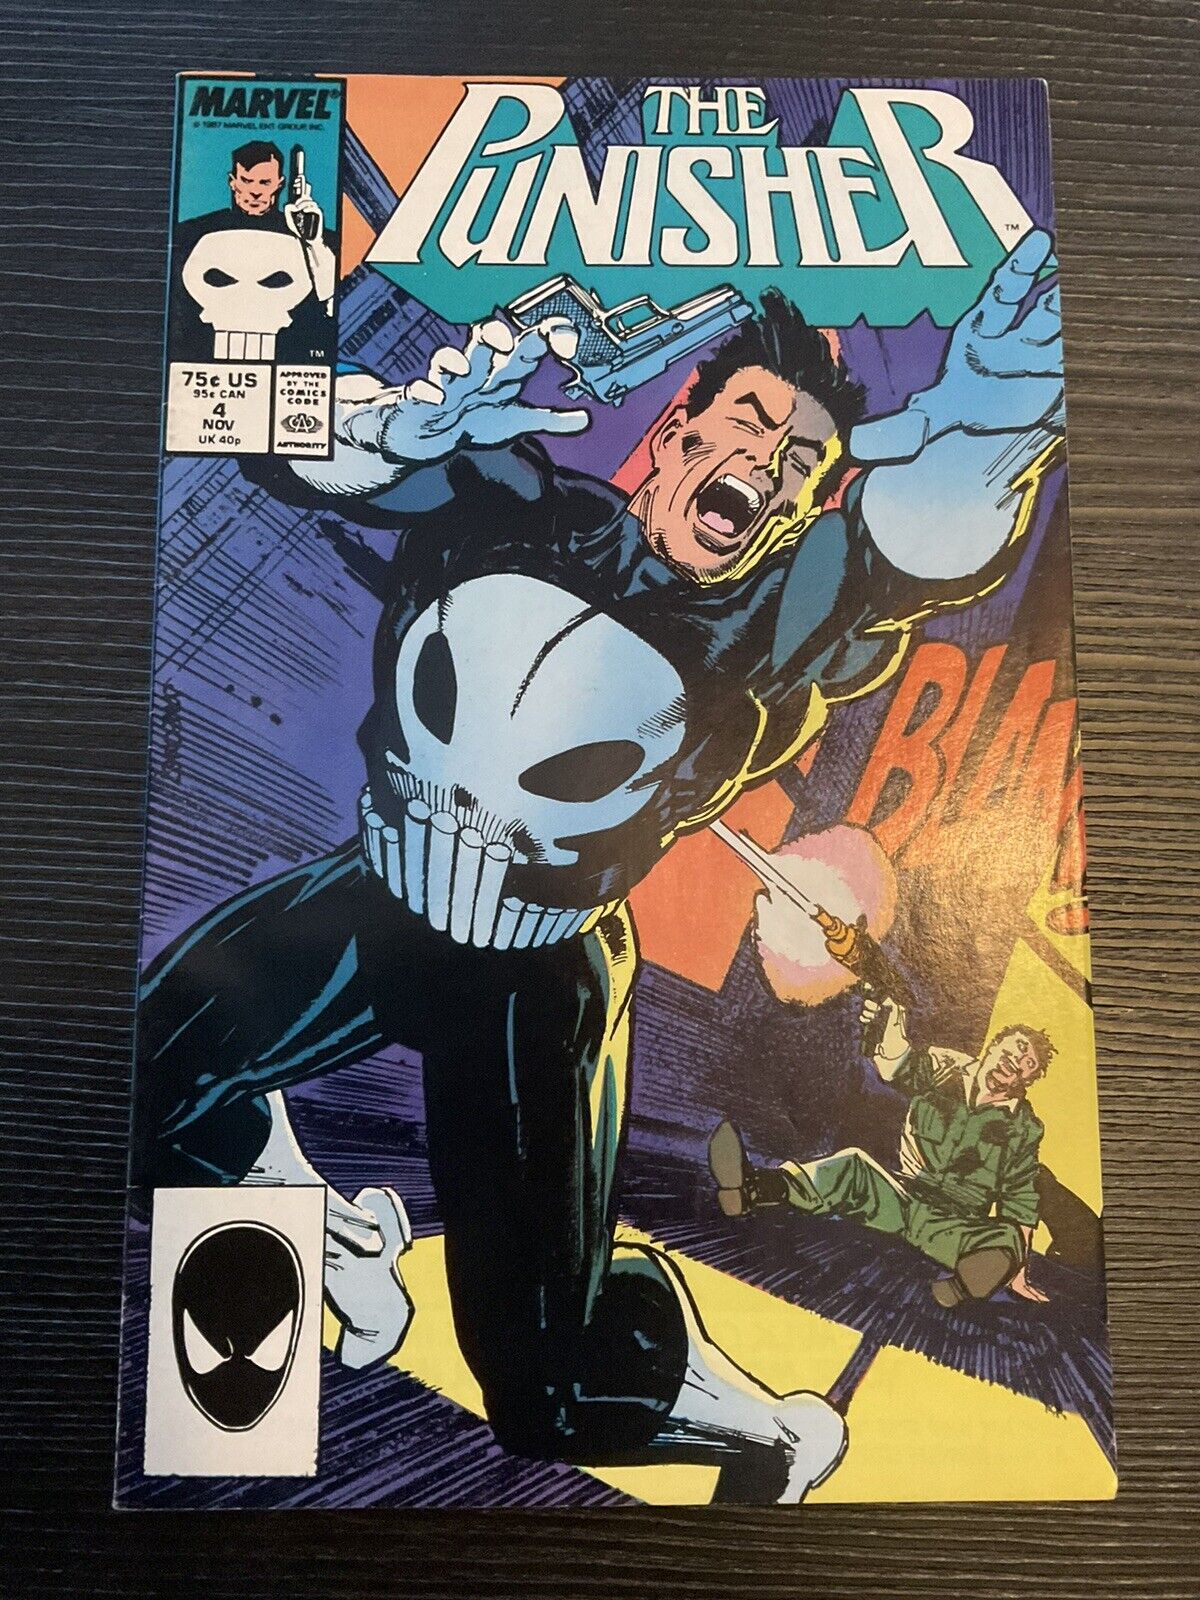 The Punisher #4 (Marvel Comics November 1987) F/VF